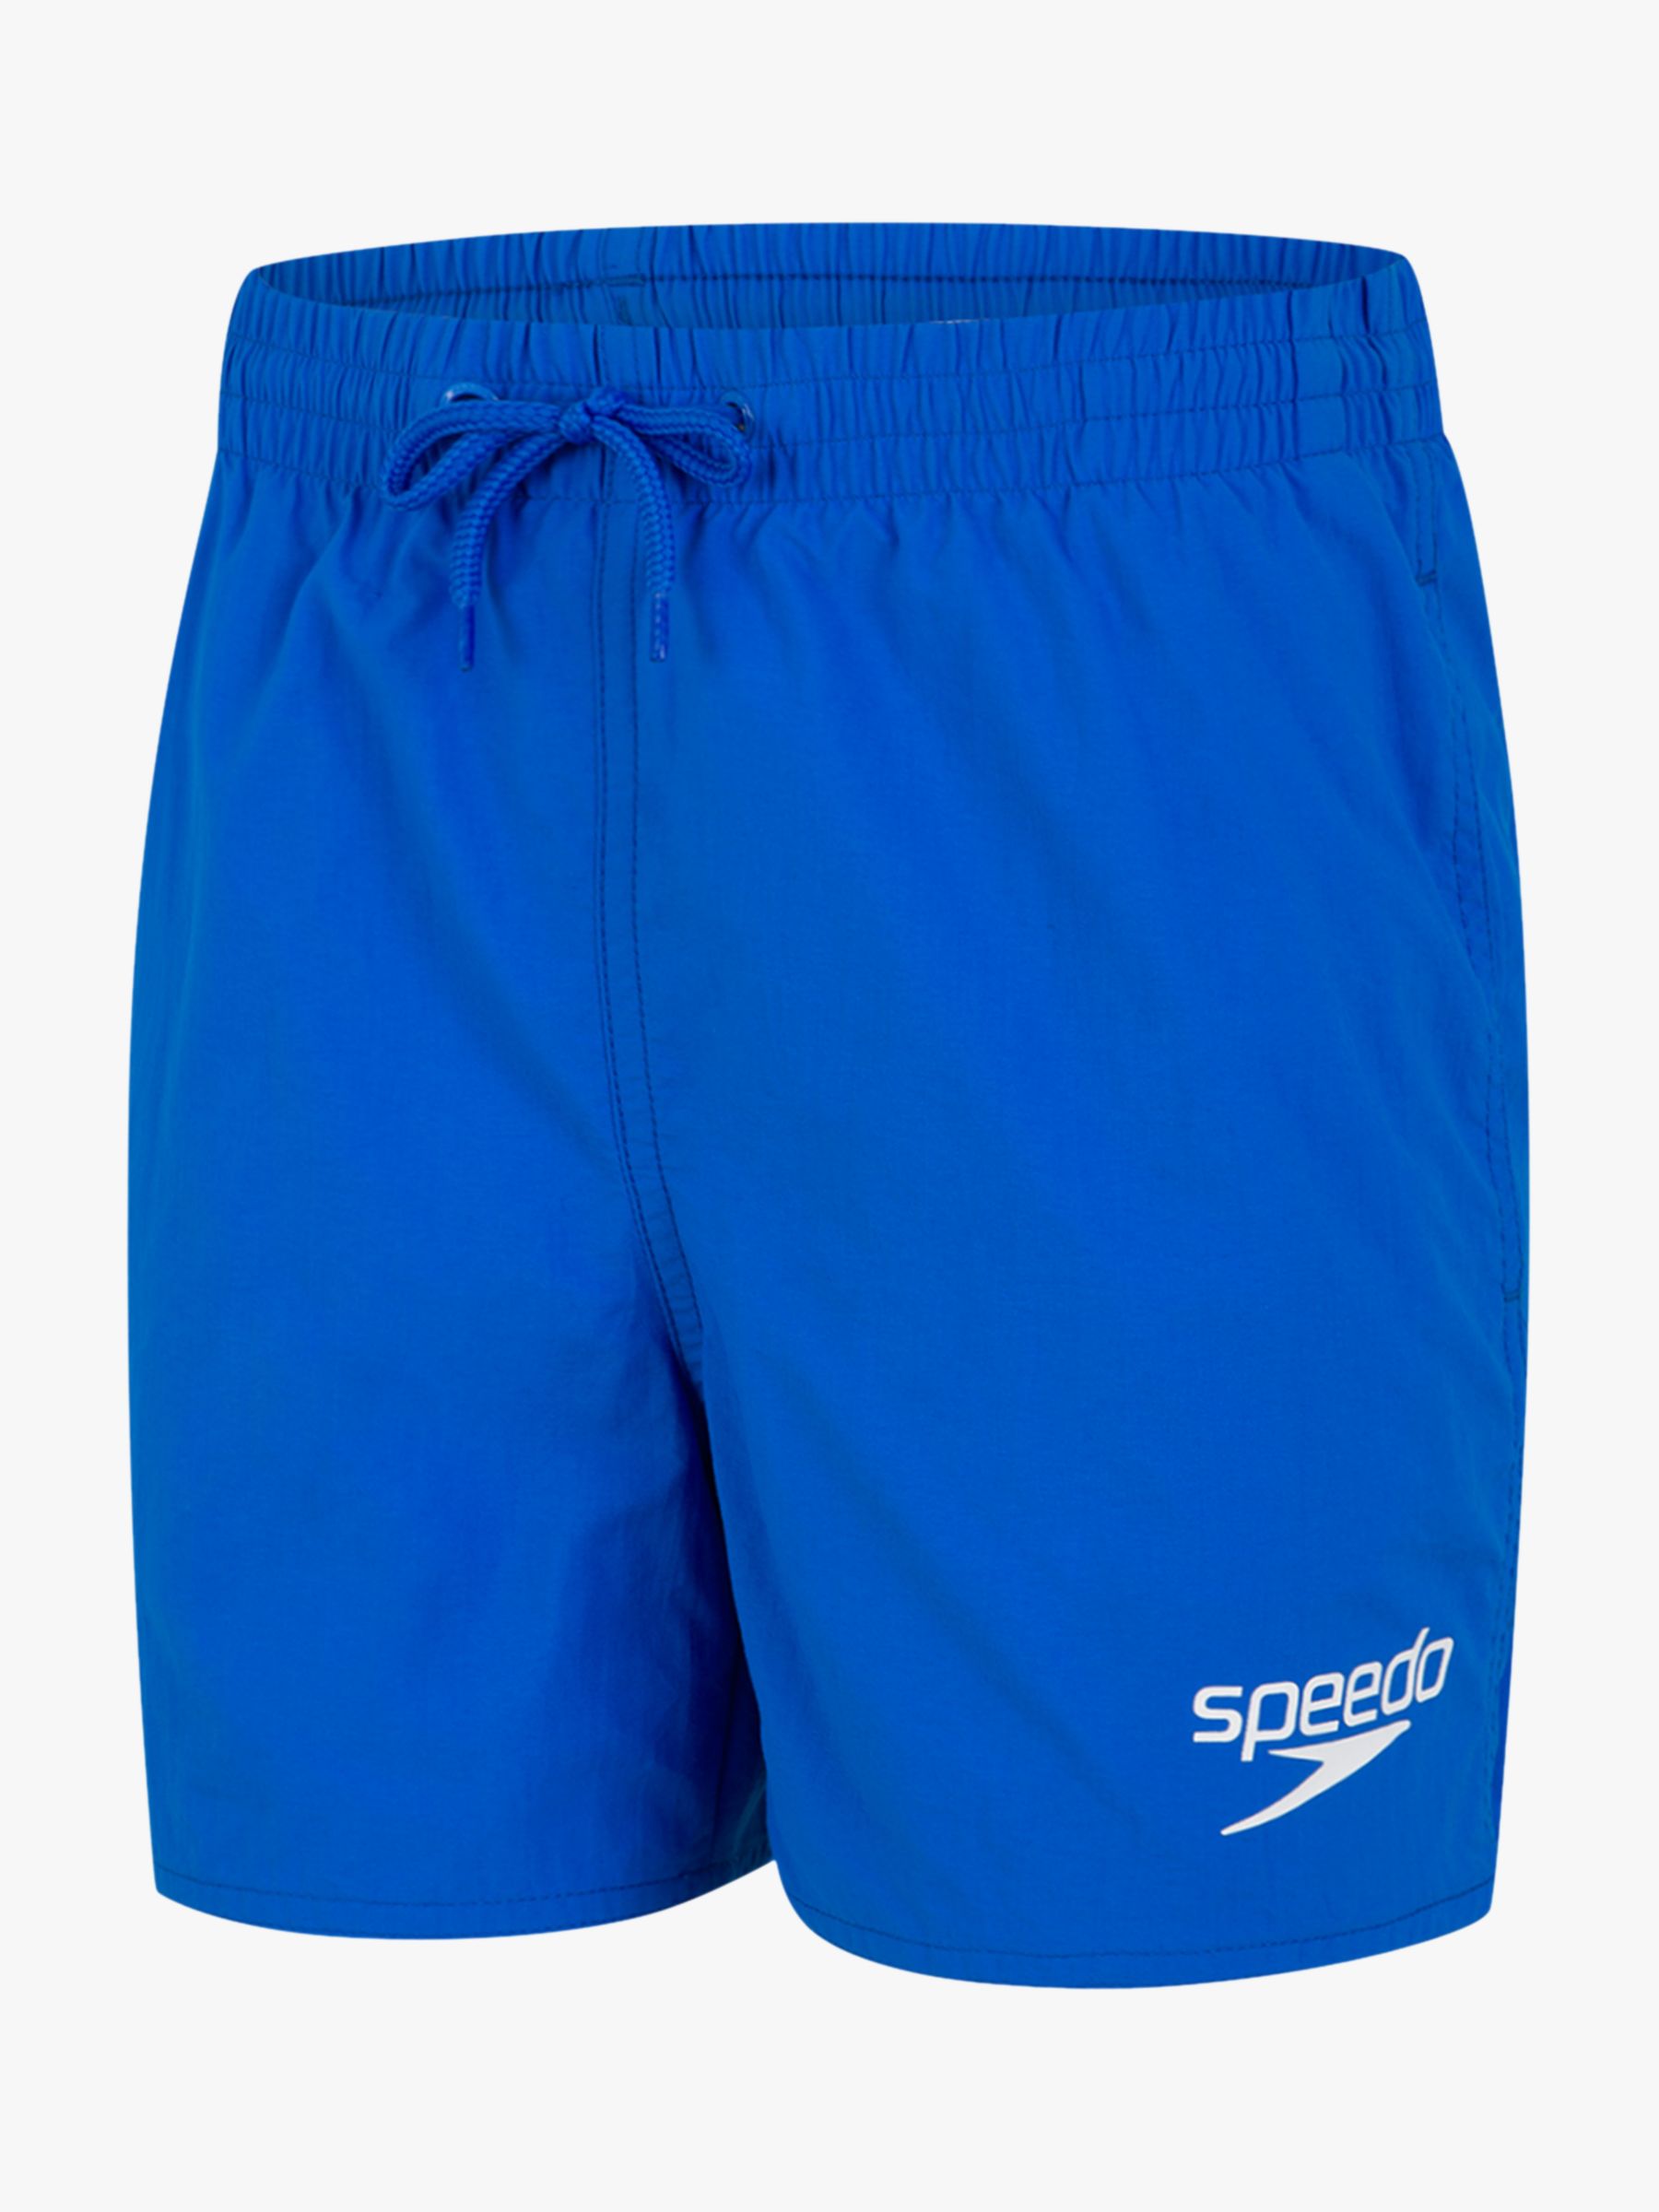 Speedo Boys' Essentials 13" Swim Shorts, Blue, M